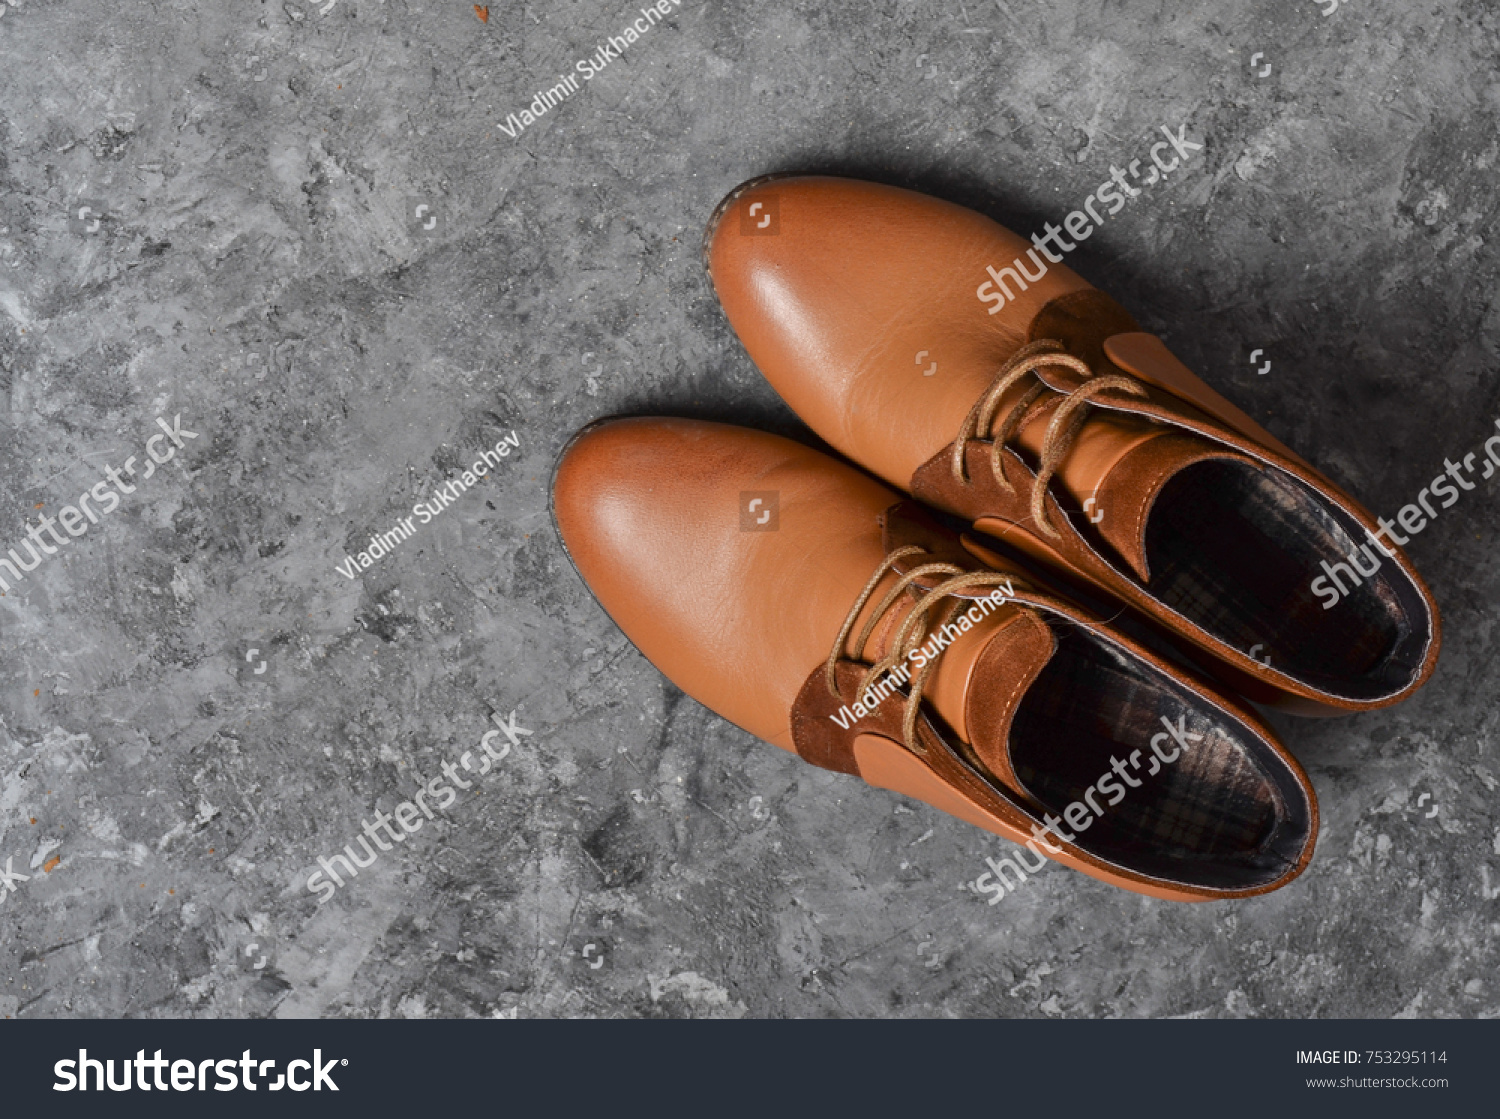 boots for concrete floors